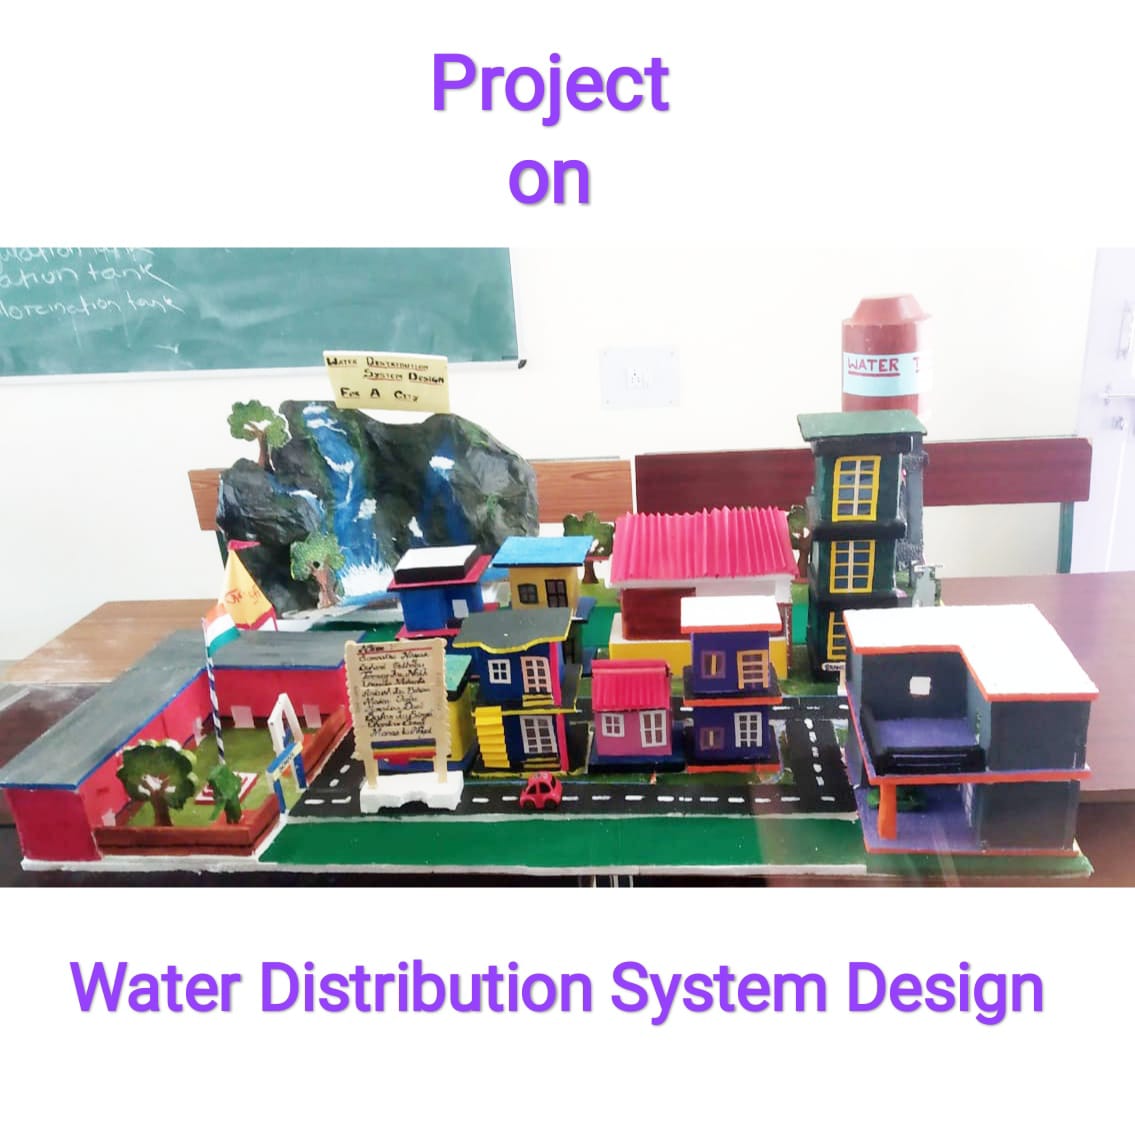 Water distribution system design